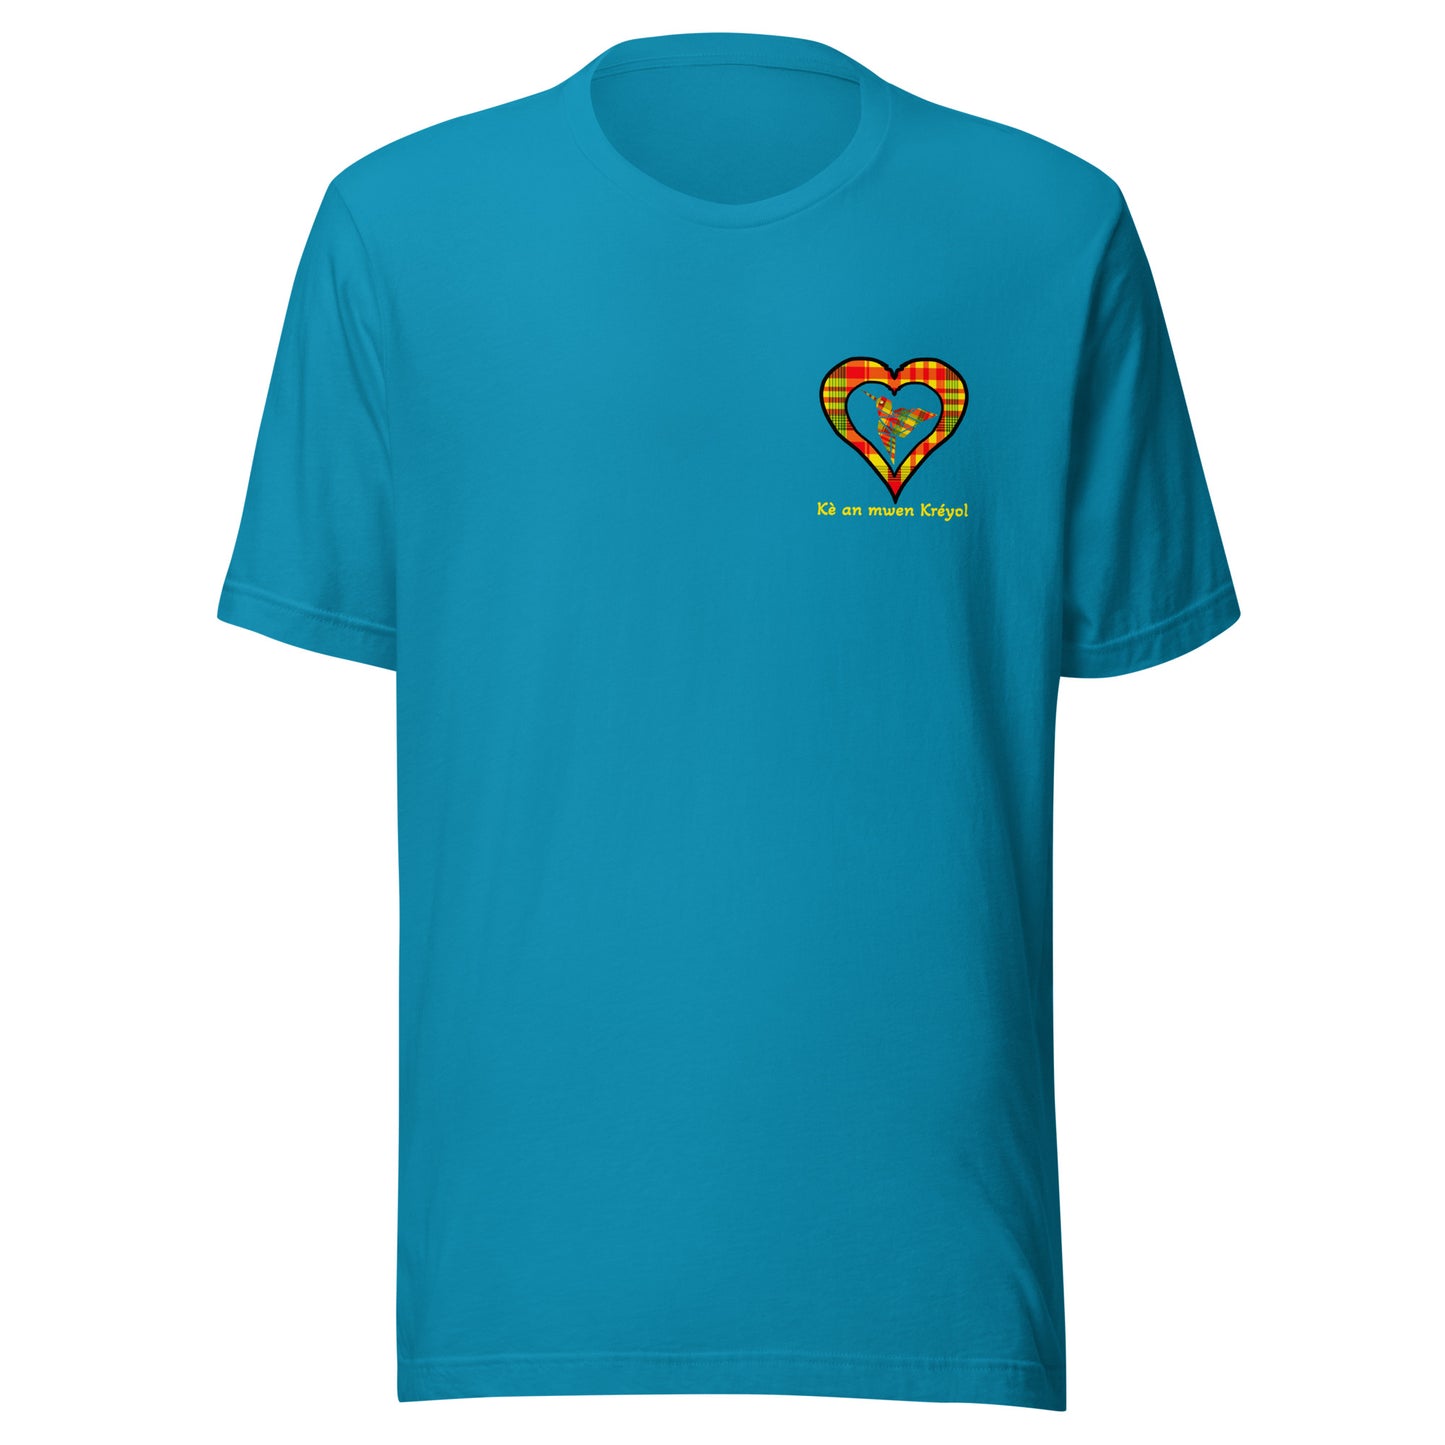 T-shirt ajusté Unisexe Coeur poitrine Madras Sunshine Kè an mwen